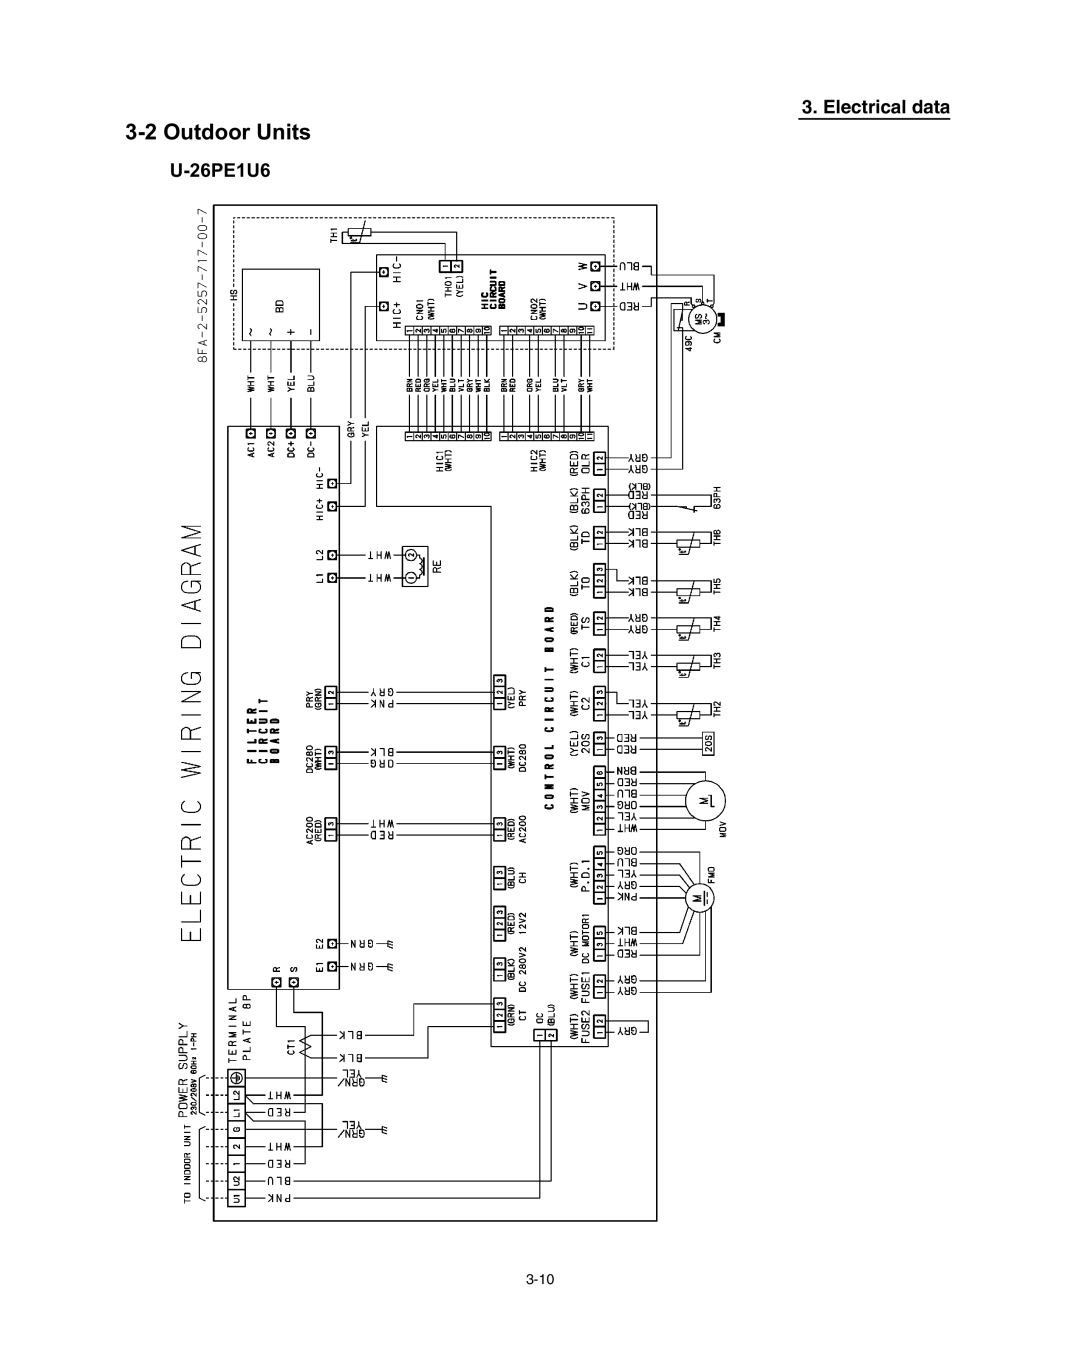 Panasonic R410A service manual 3-2Outdoor Units, Electrical data, U-26PE1U6 